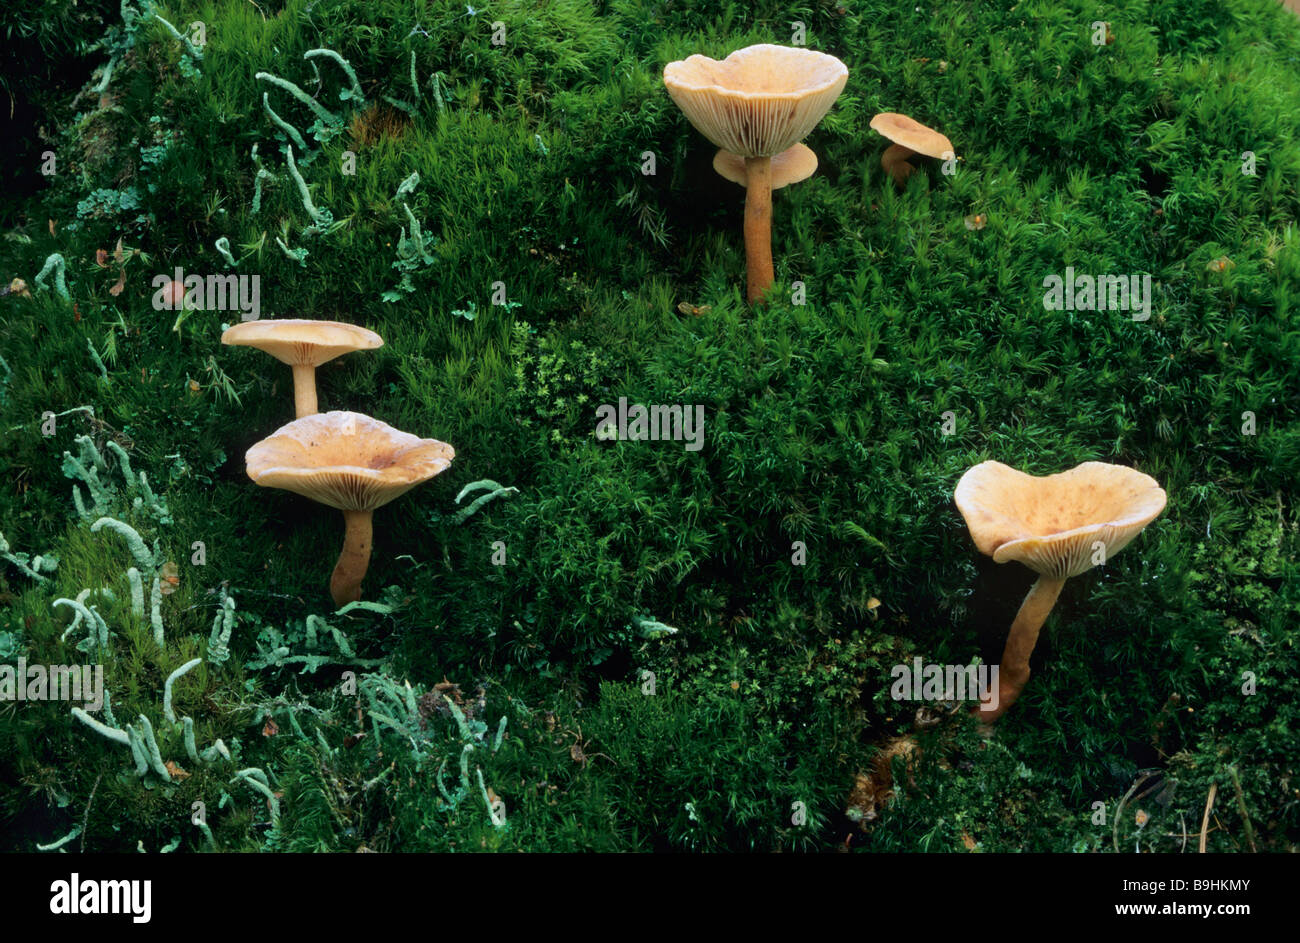 Mushrooms on moss Stock Photo